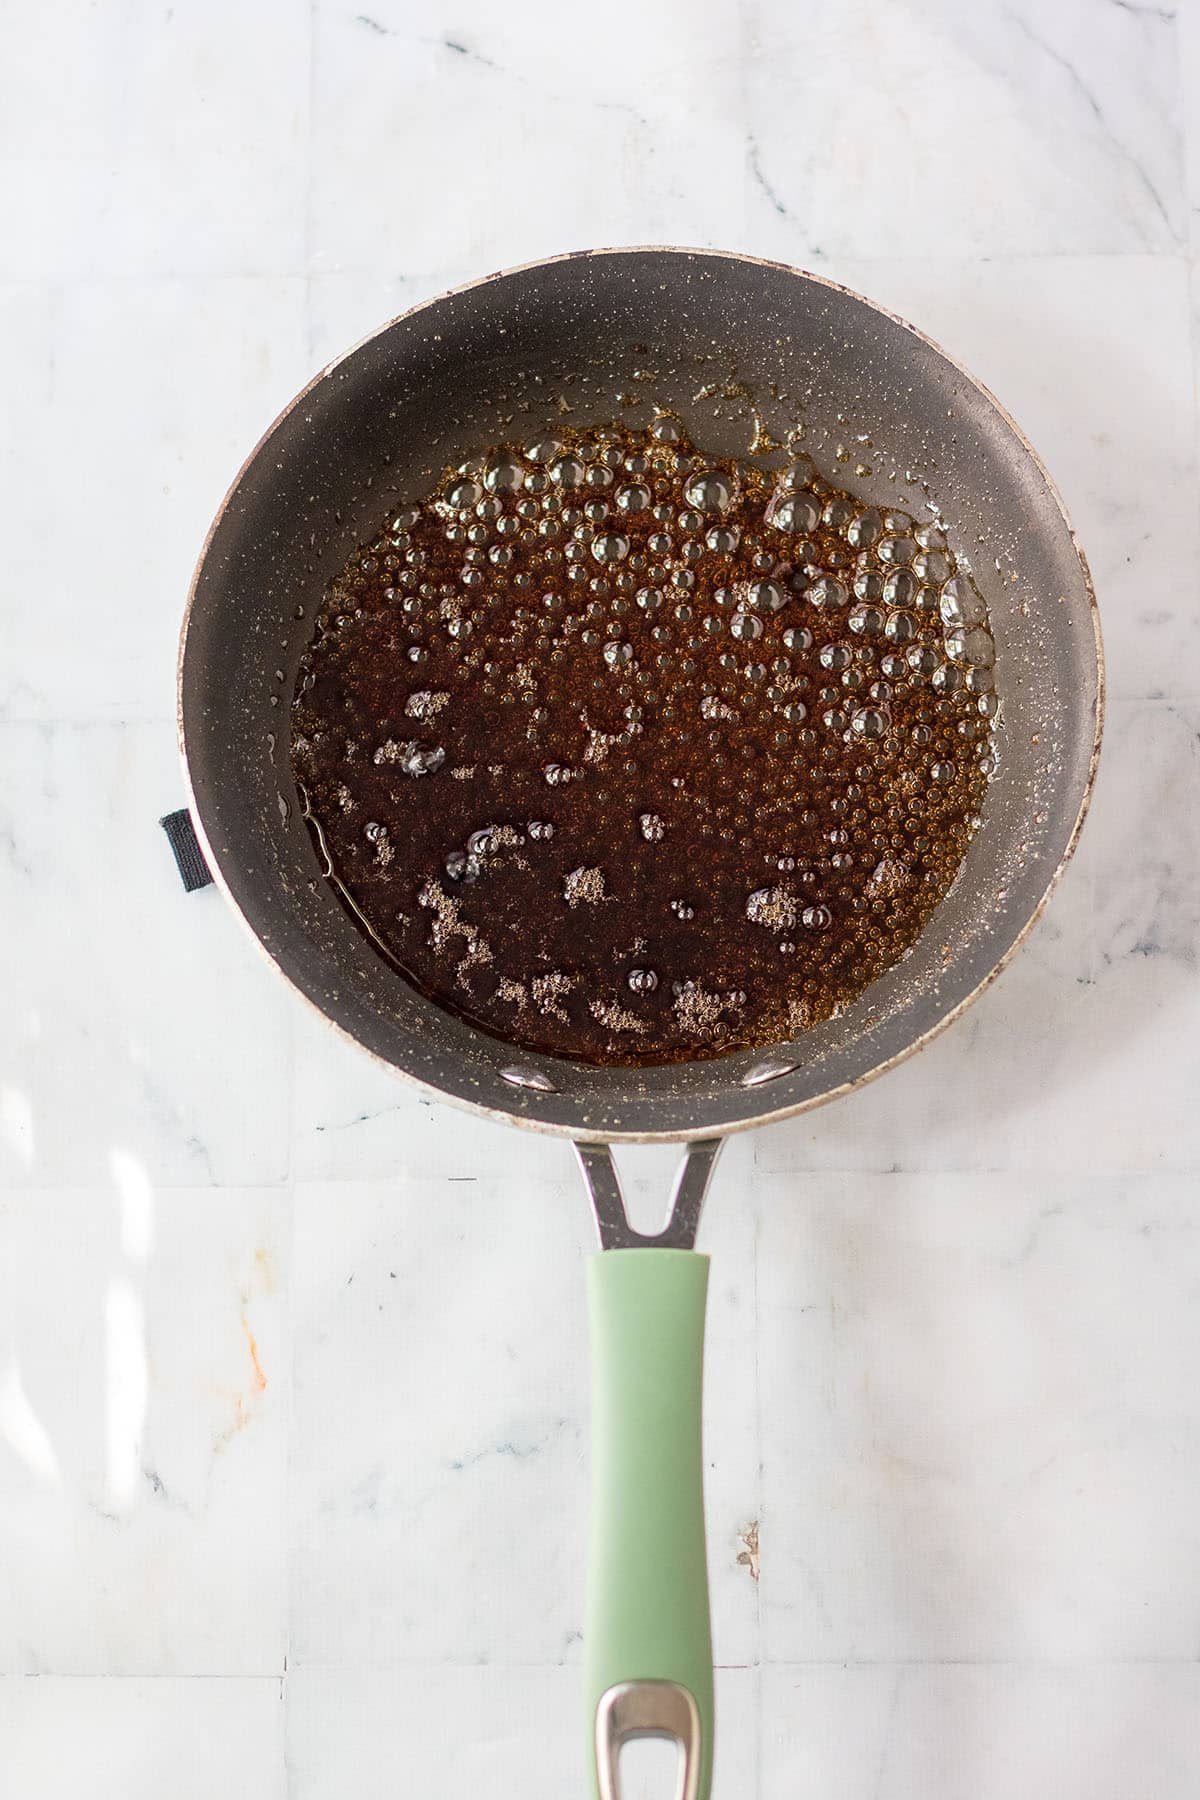 Boiling Coca-cola liquid in a pan